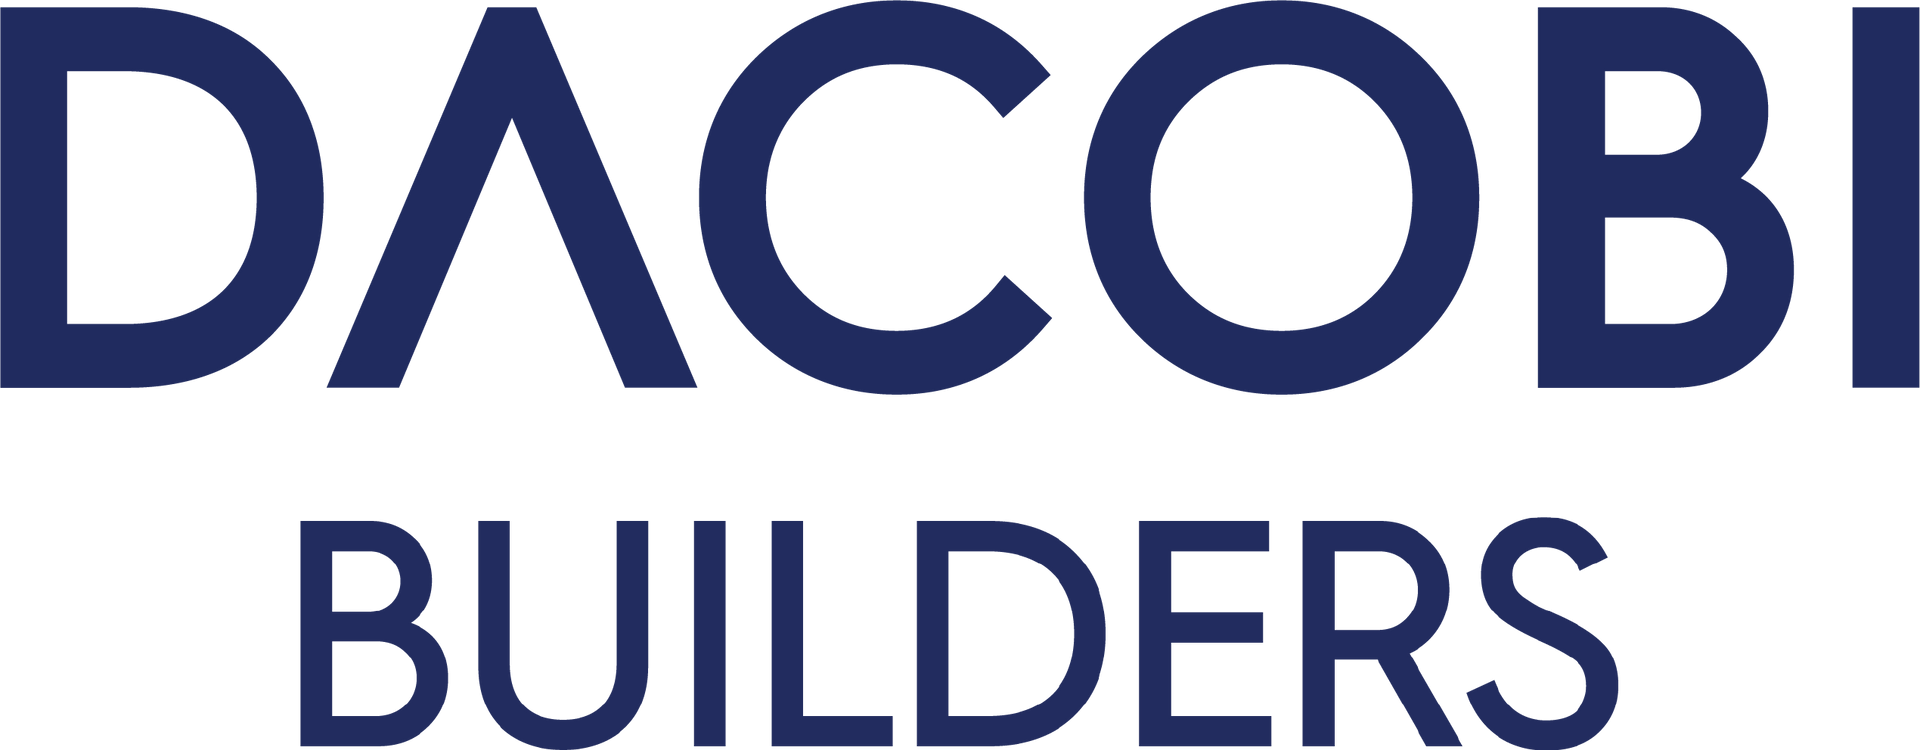 Dacobi Builders - Logo